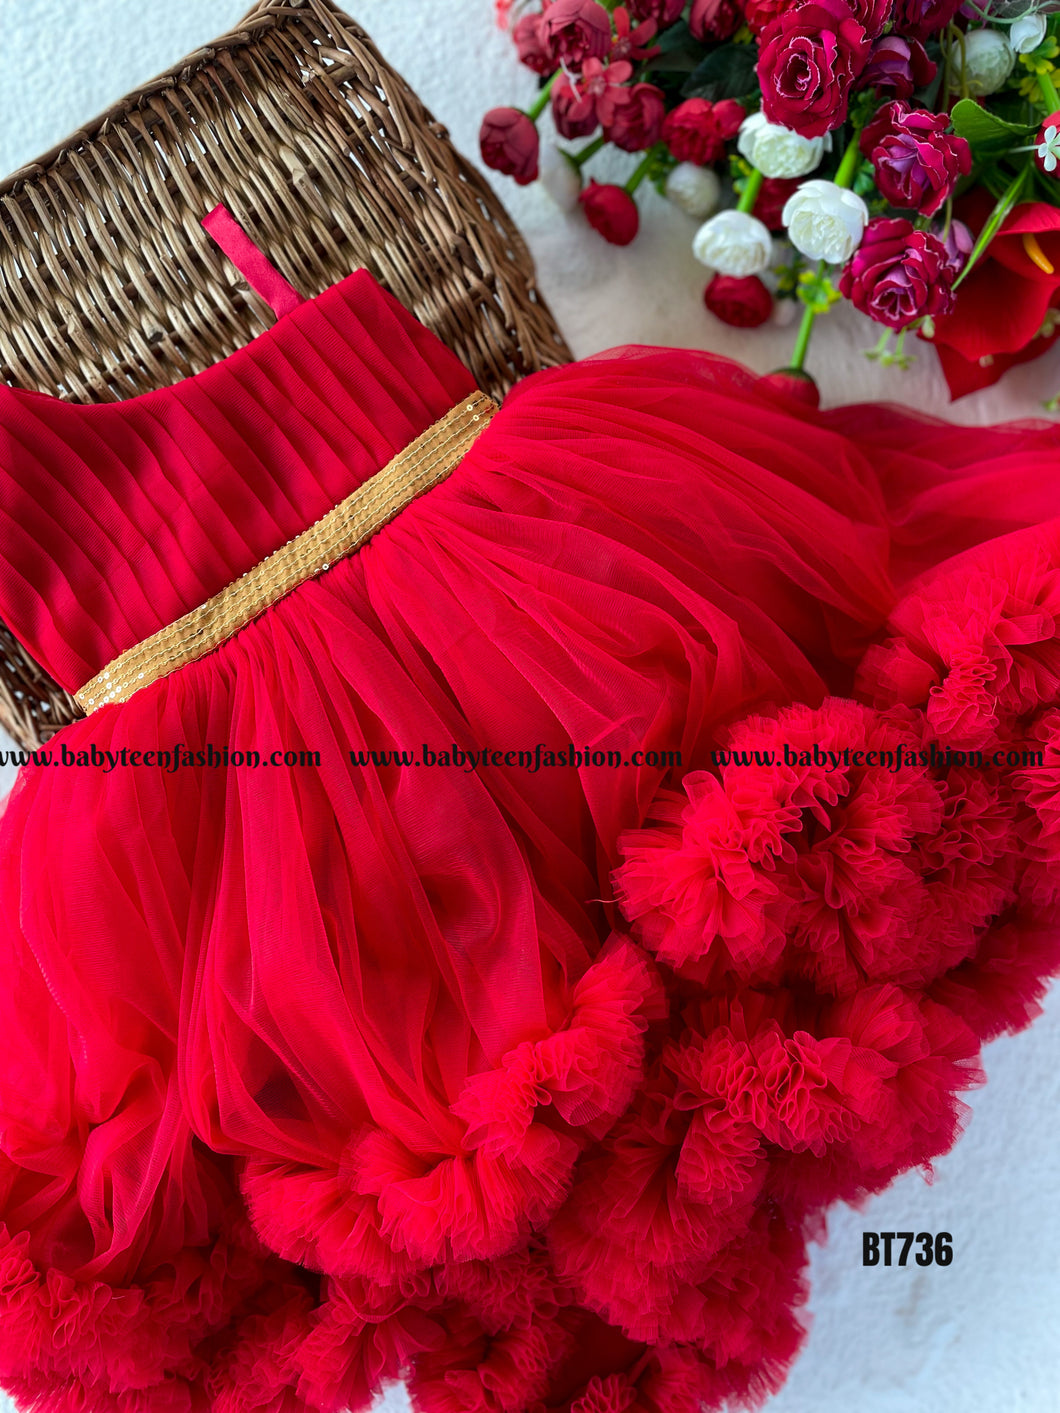 BT736 Ruby Ruffles – Enchanting Party Dress for Little Stars ✨